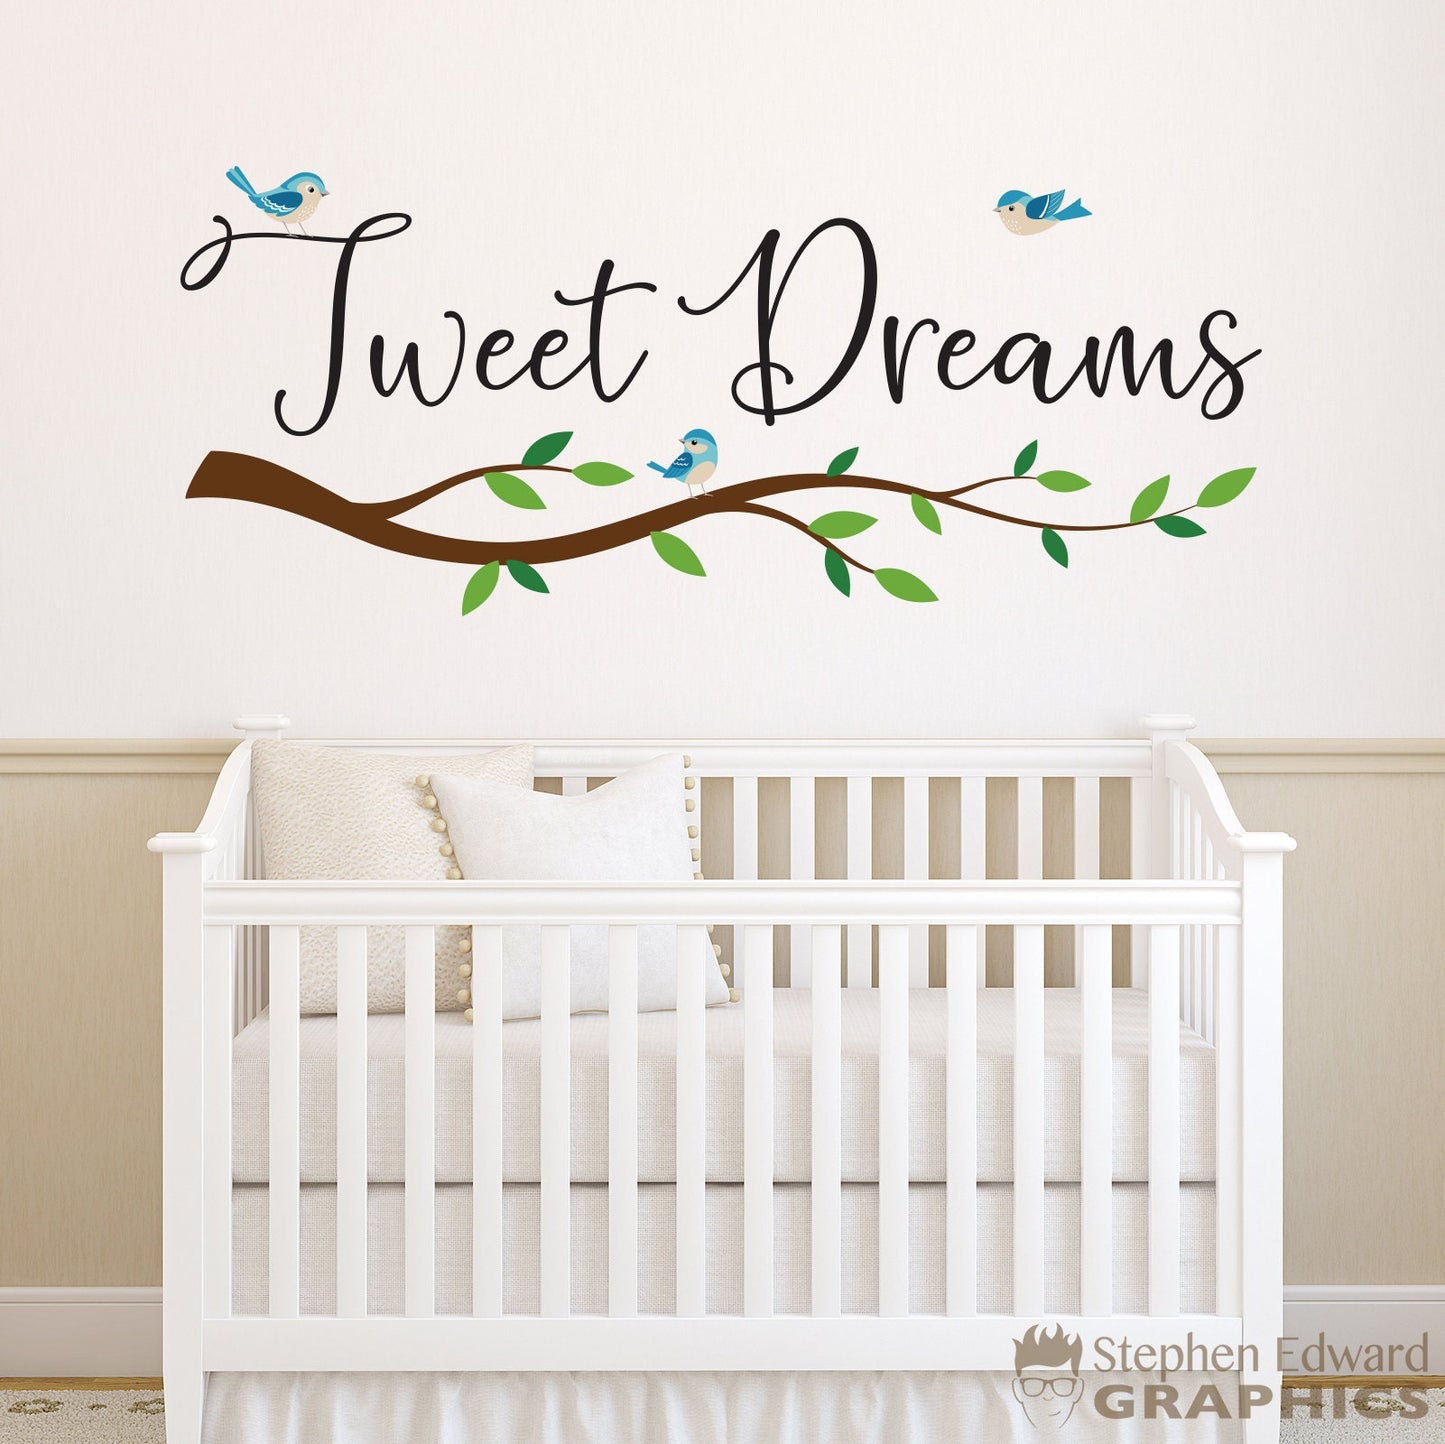 Tweet Dreams Nursery Decal - Baby Wall Art - Birds and Branch - Children Decor - Full Color version